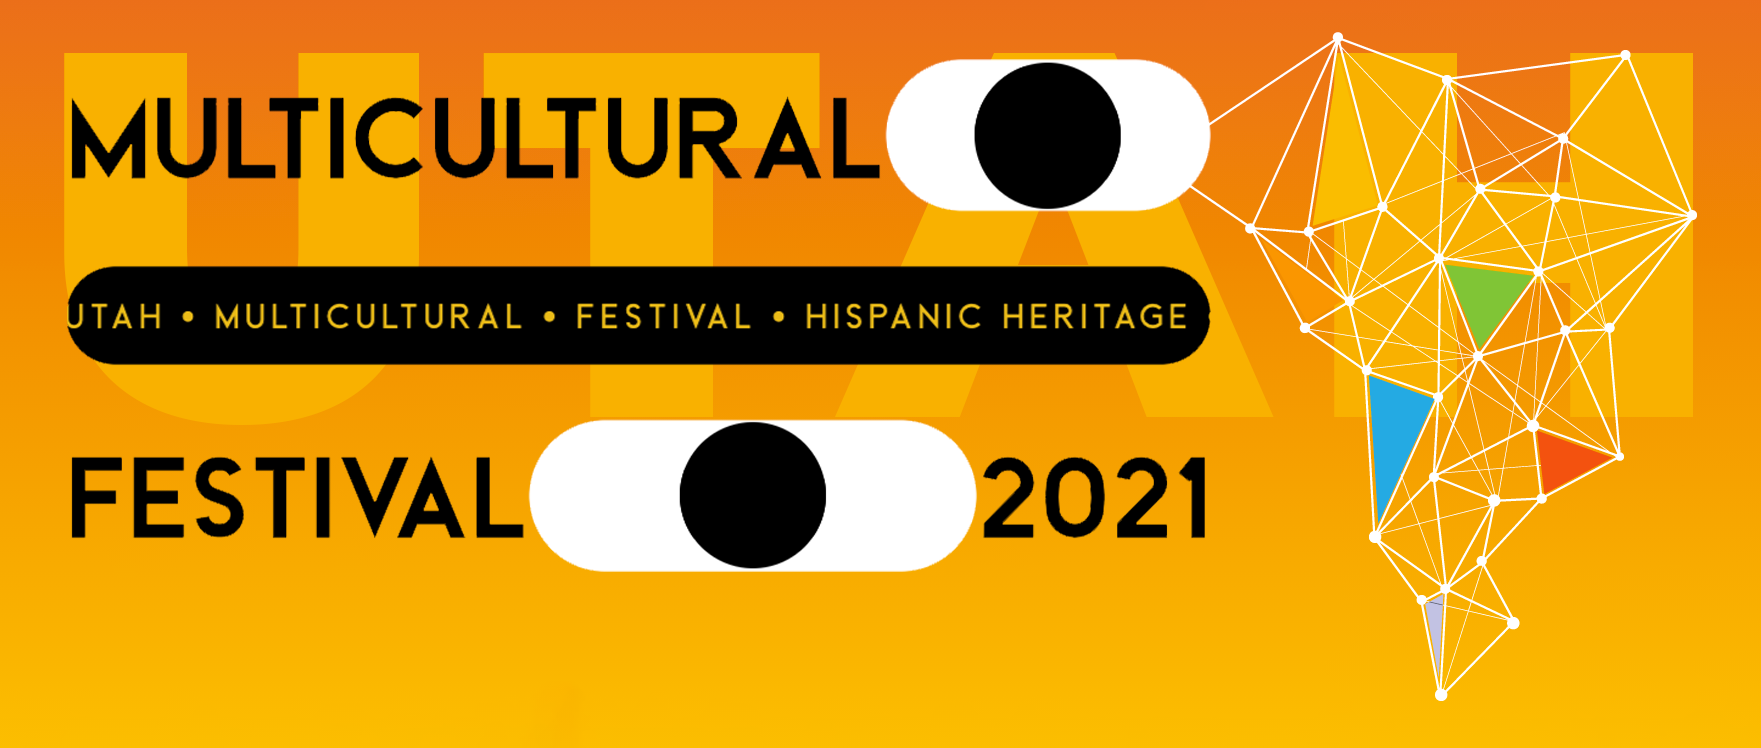 Utah Multicultural Festival